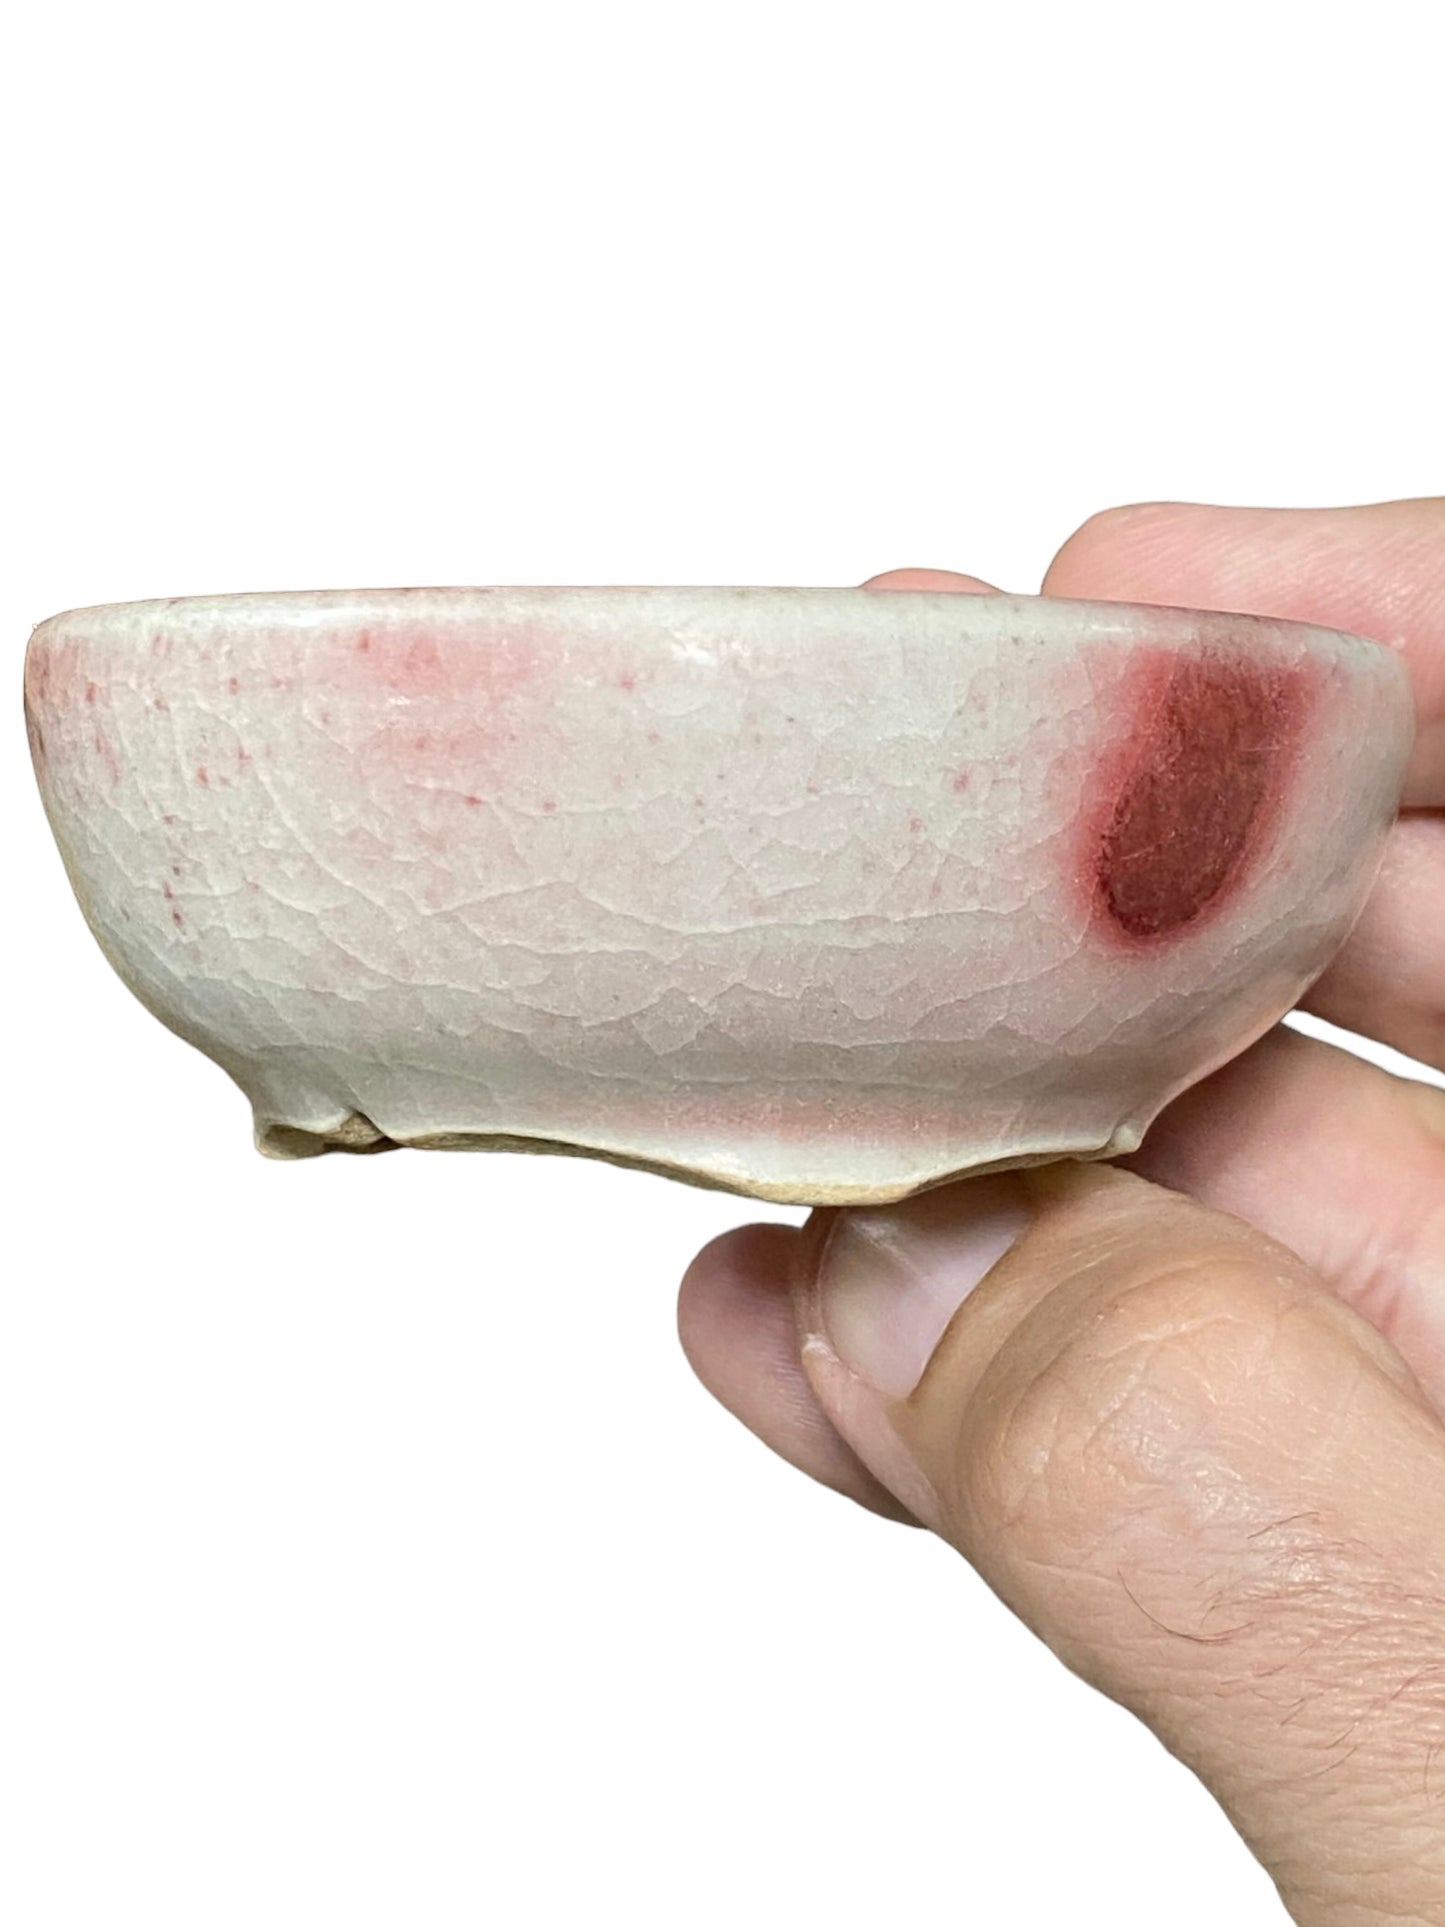 Isso - Glazed Bowl Bonsai or Accent Pot